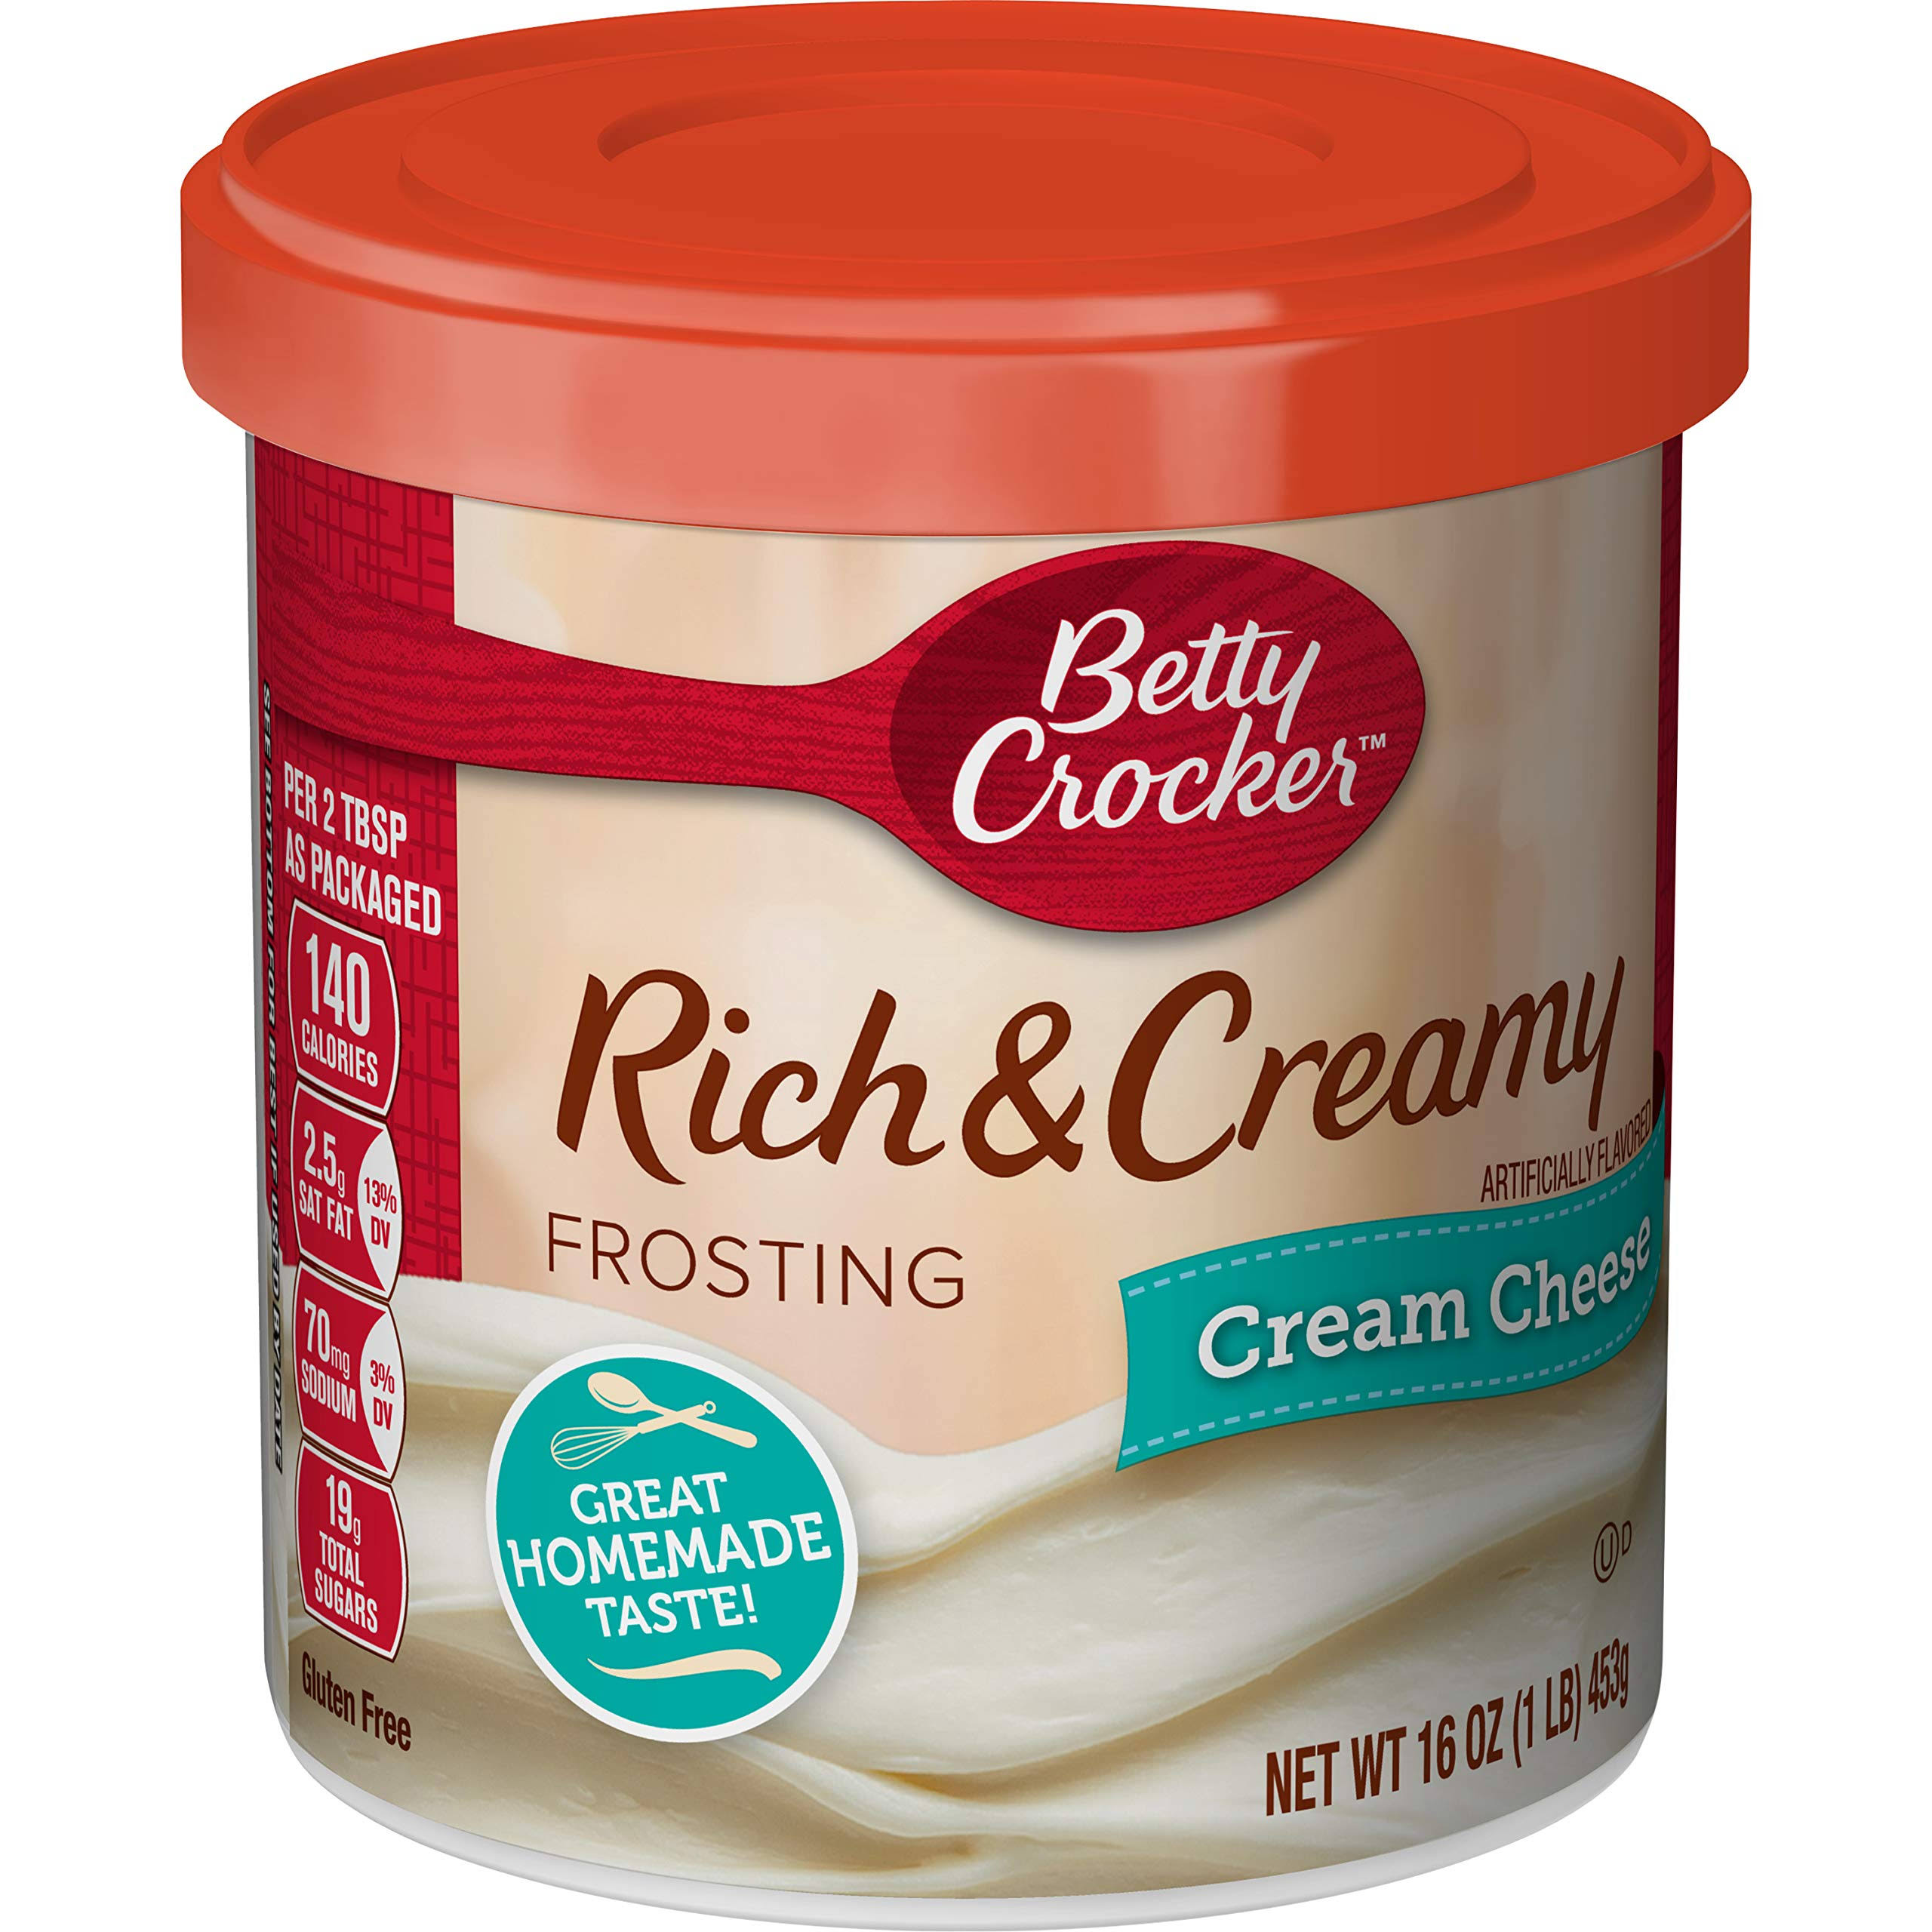 Betty Crocker Rich & Creamy Frosting - Cream Cheese, 16oz